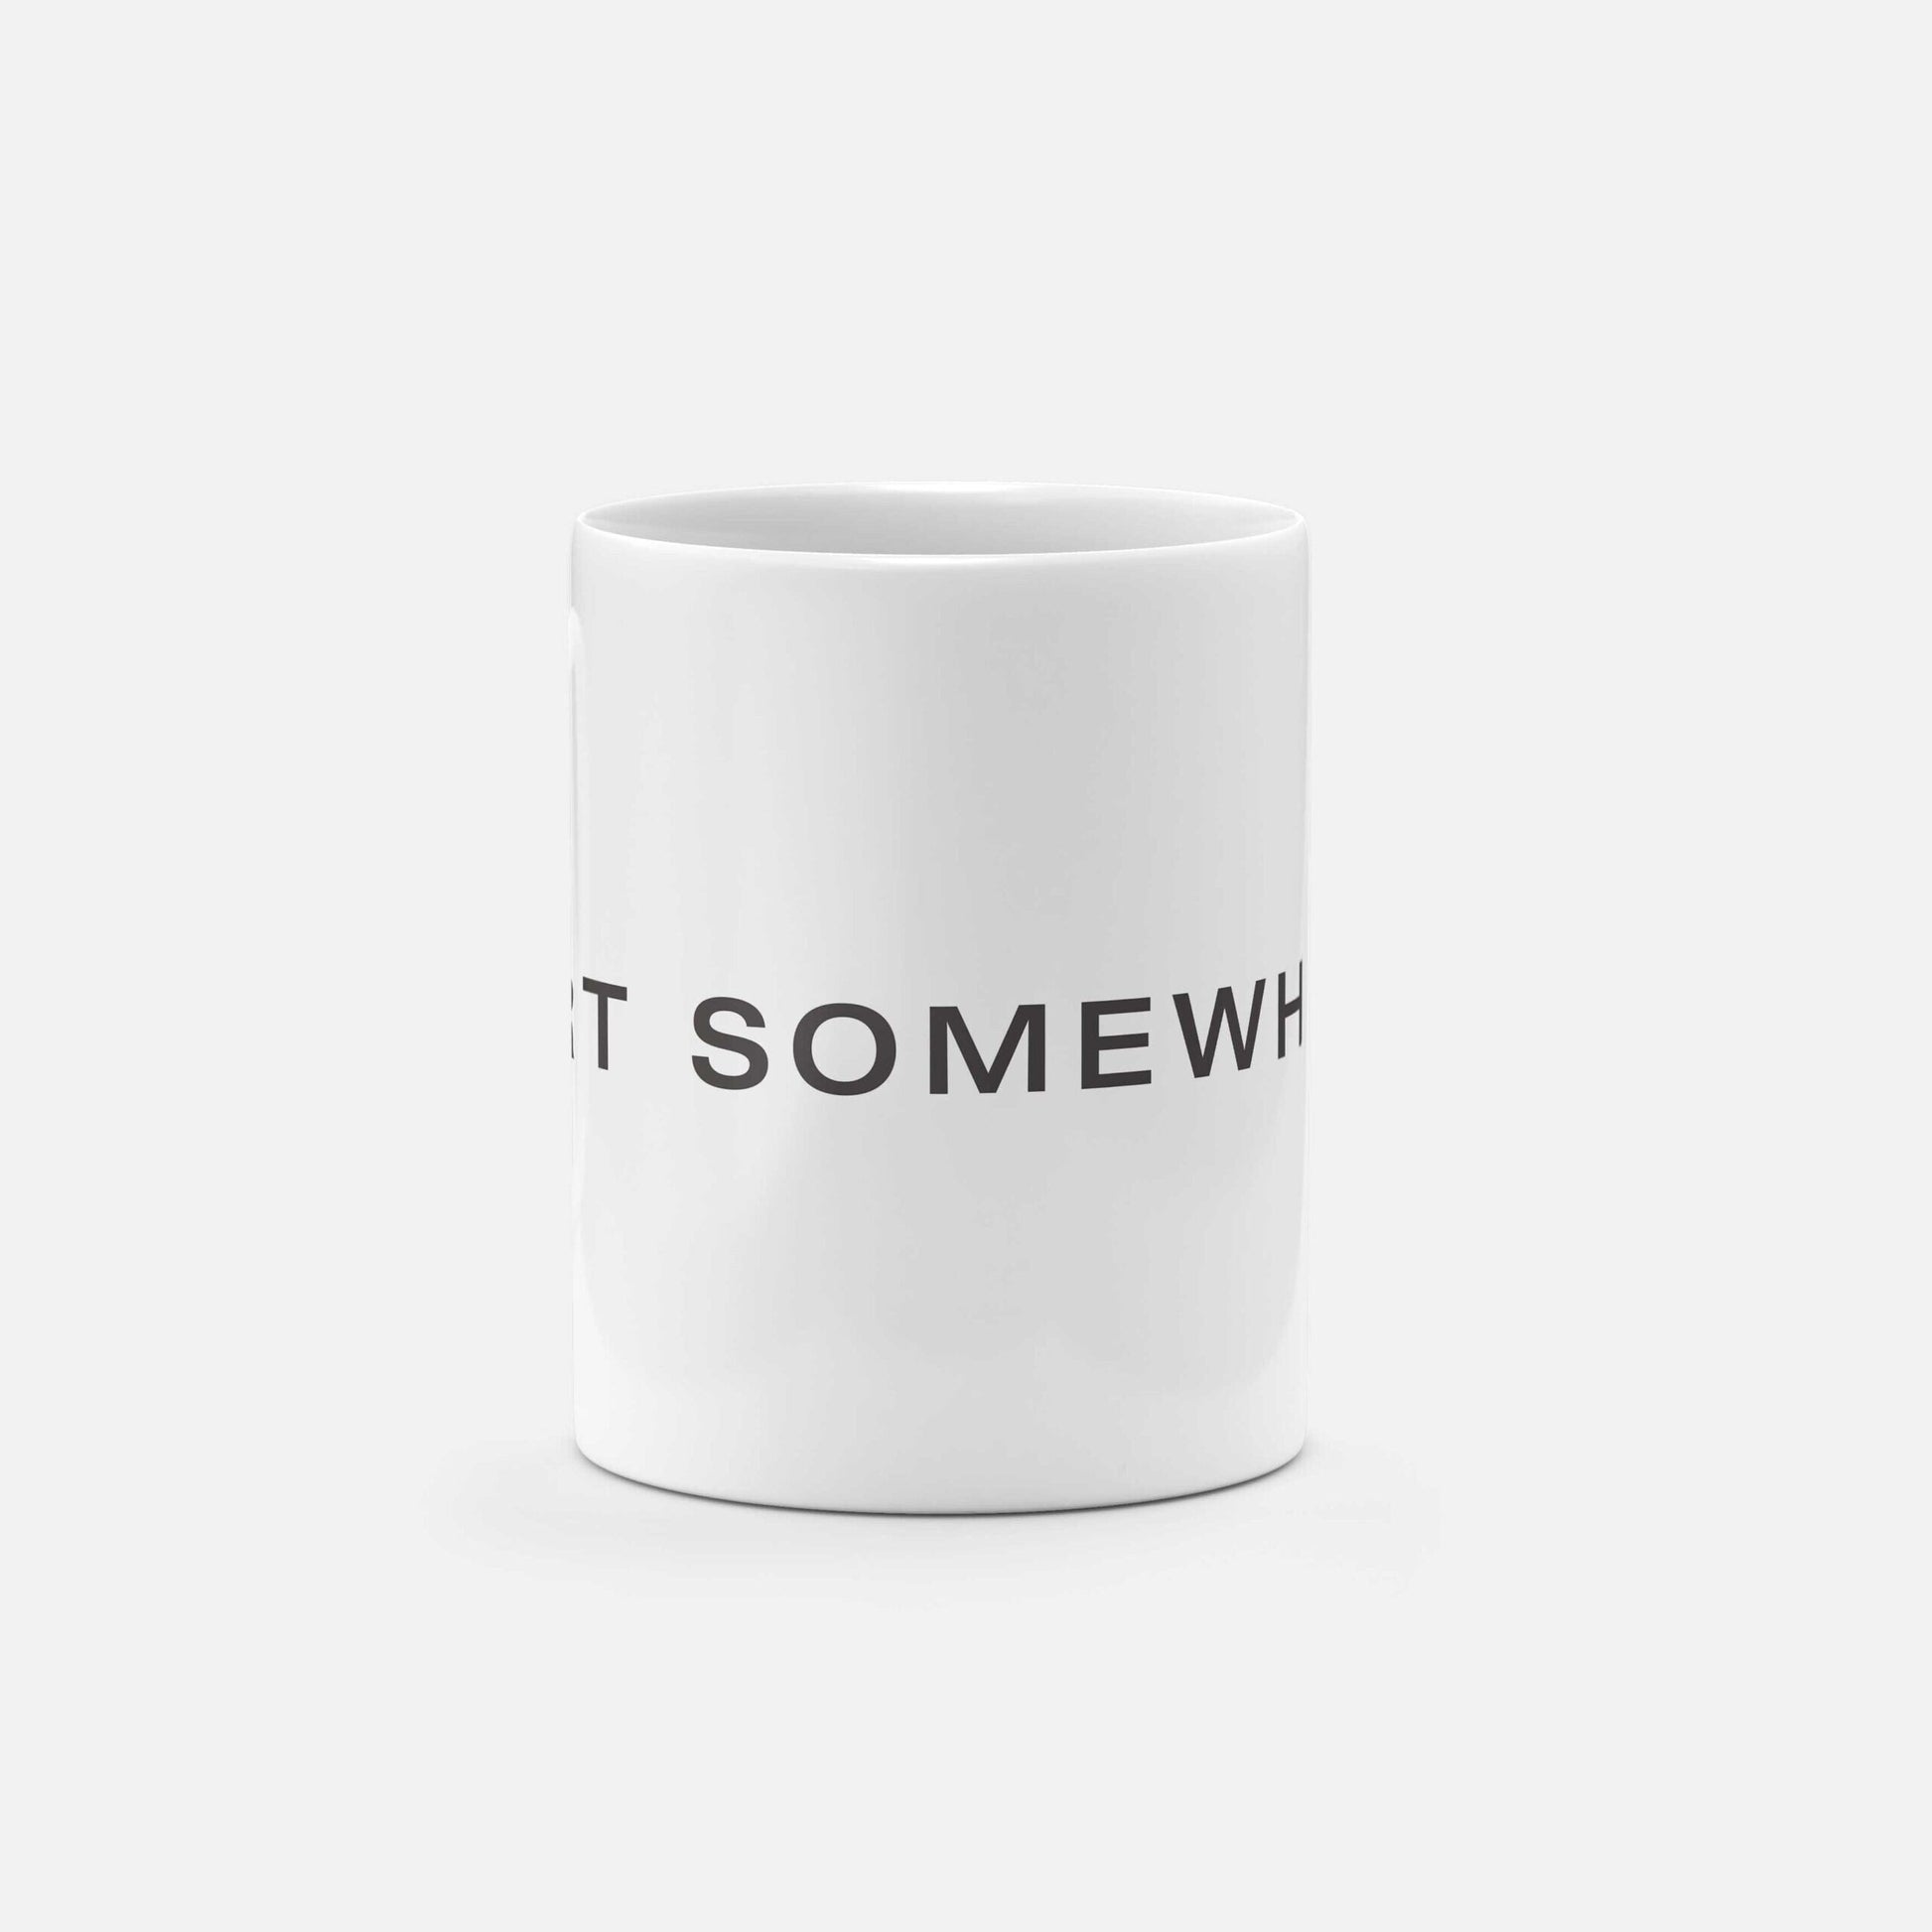 Start Somewhere 11oz Mug-The Design Craft